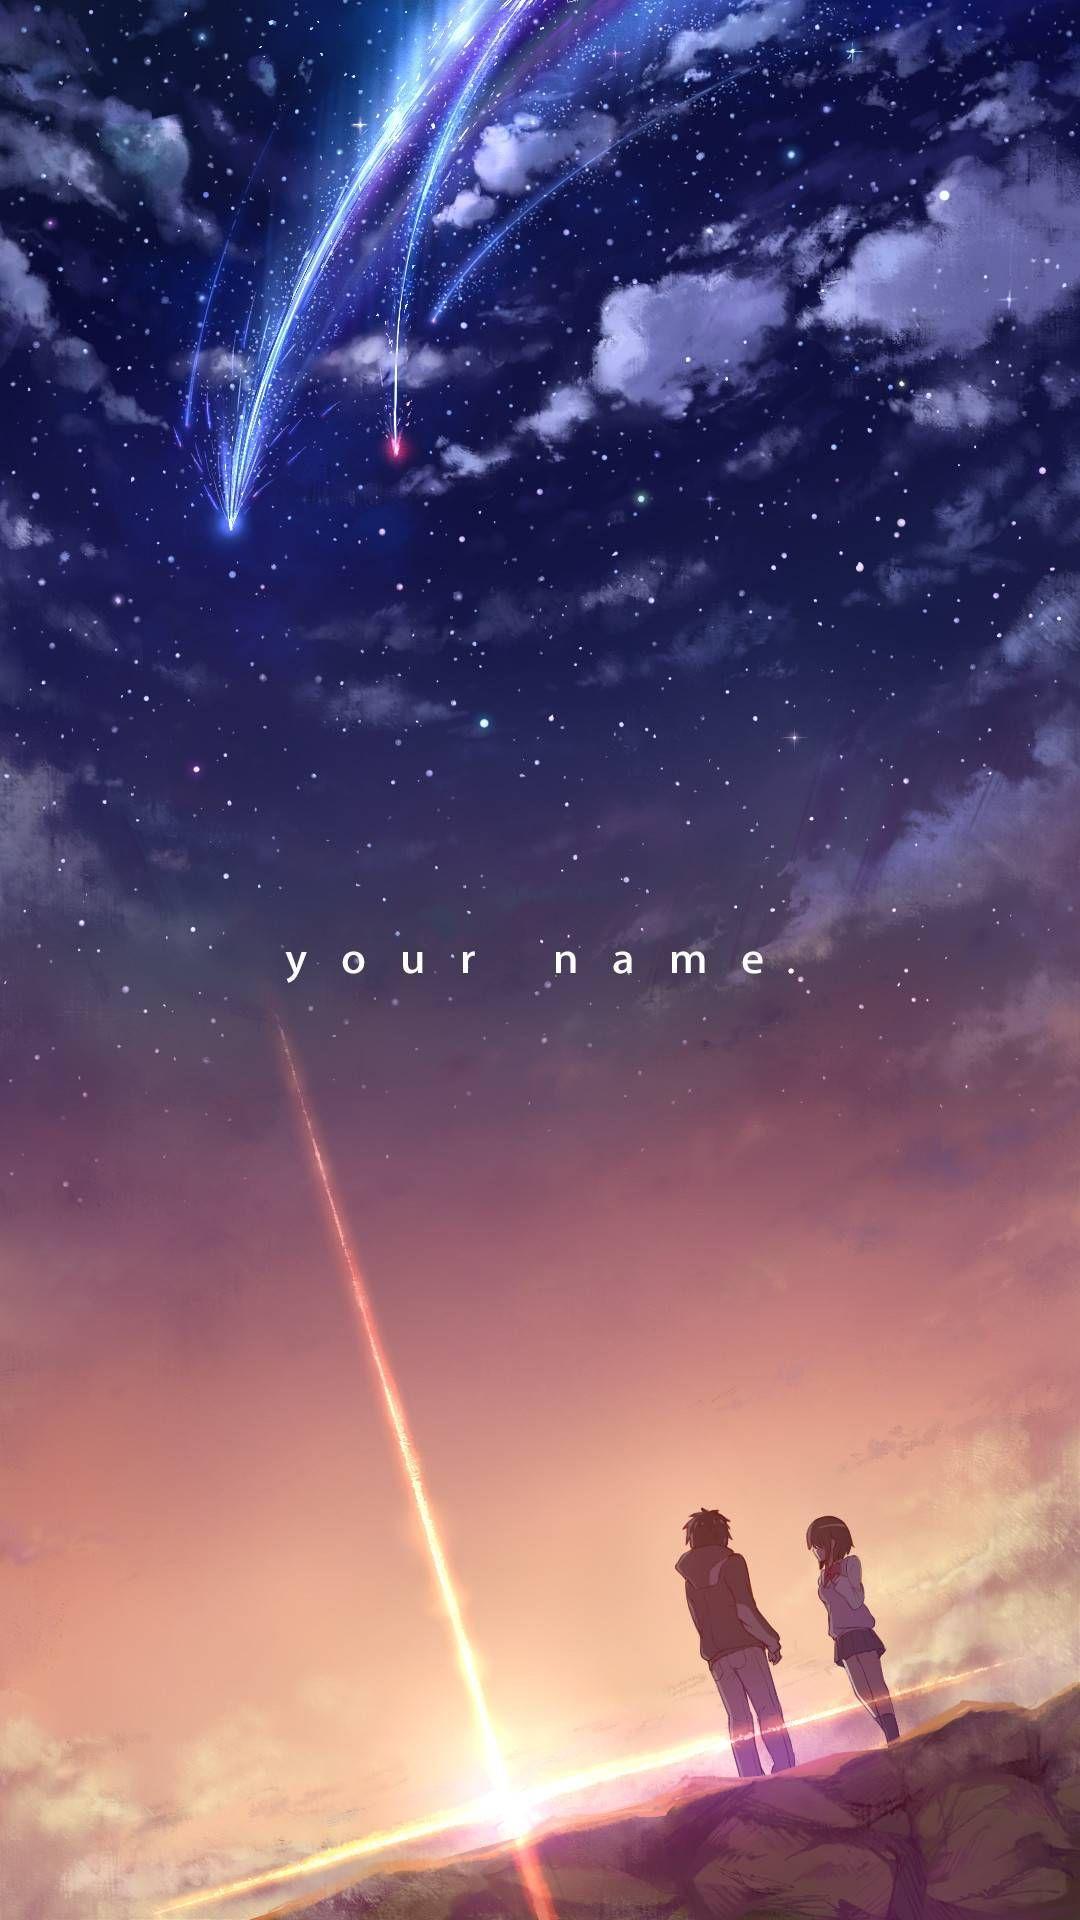 Anime Your Name Live Wallpaper Free Anime Your Name Live